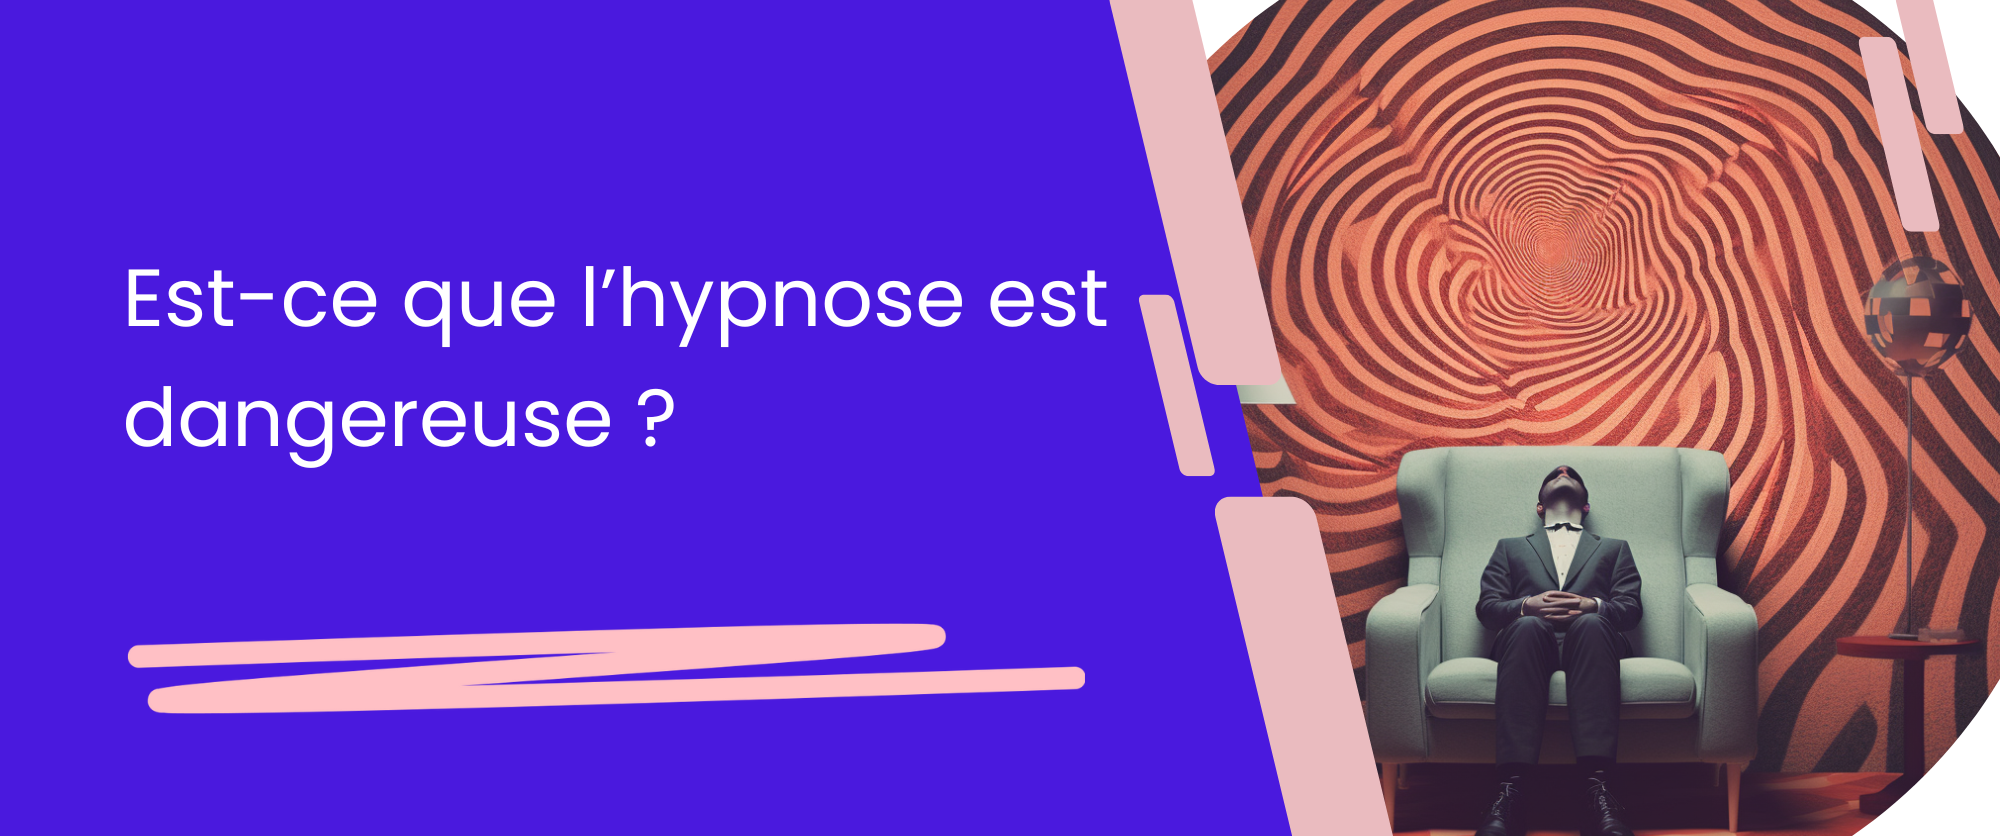 hypnose danger